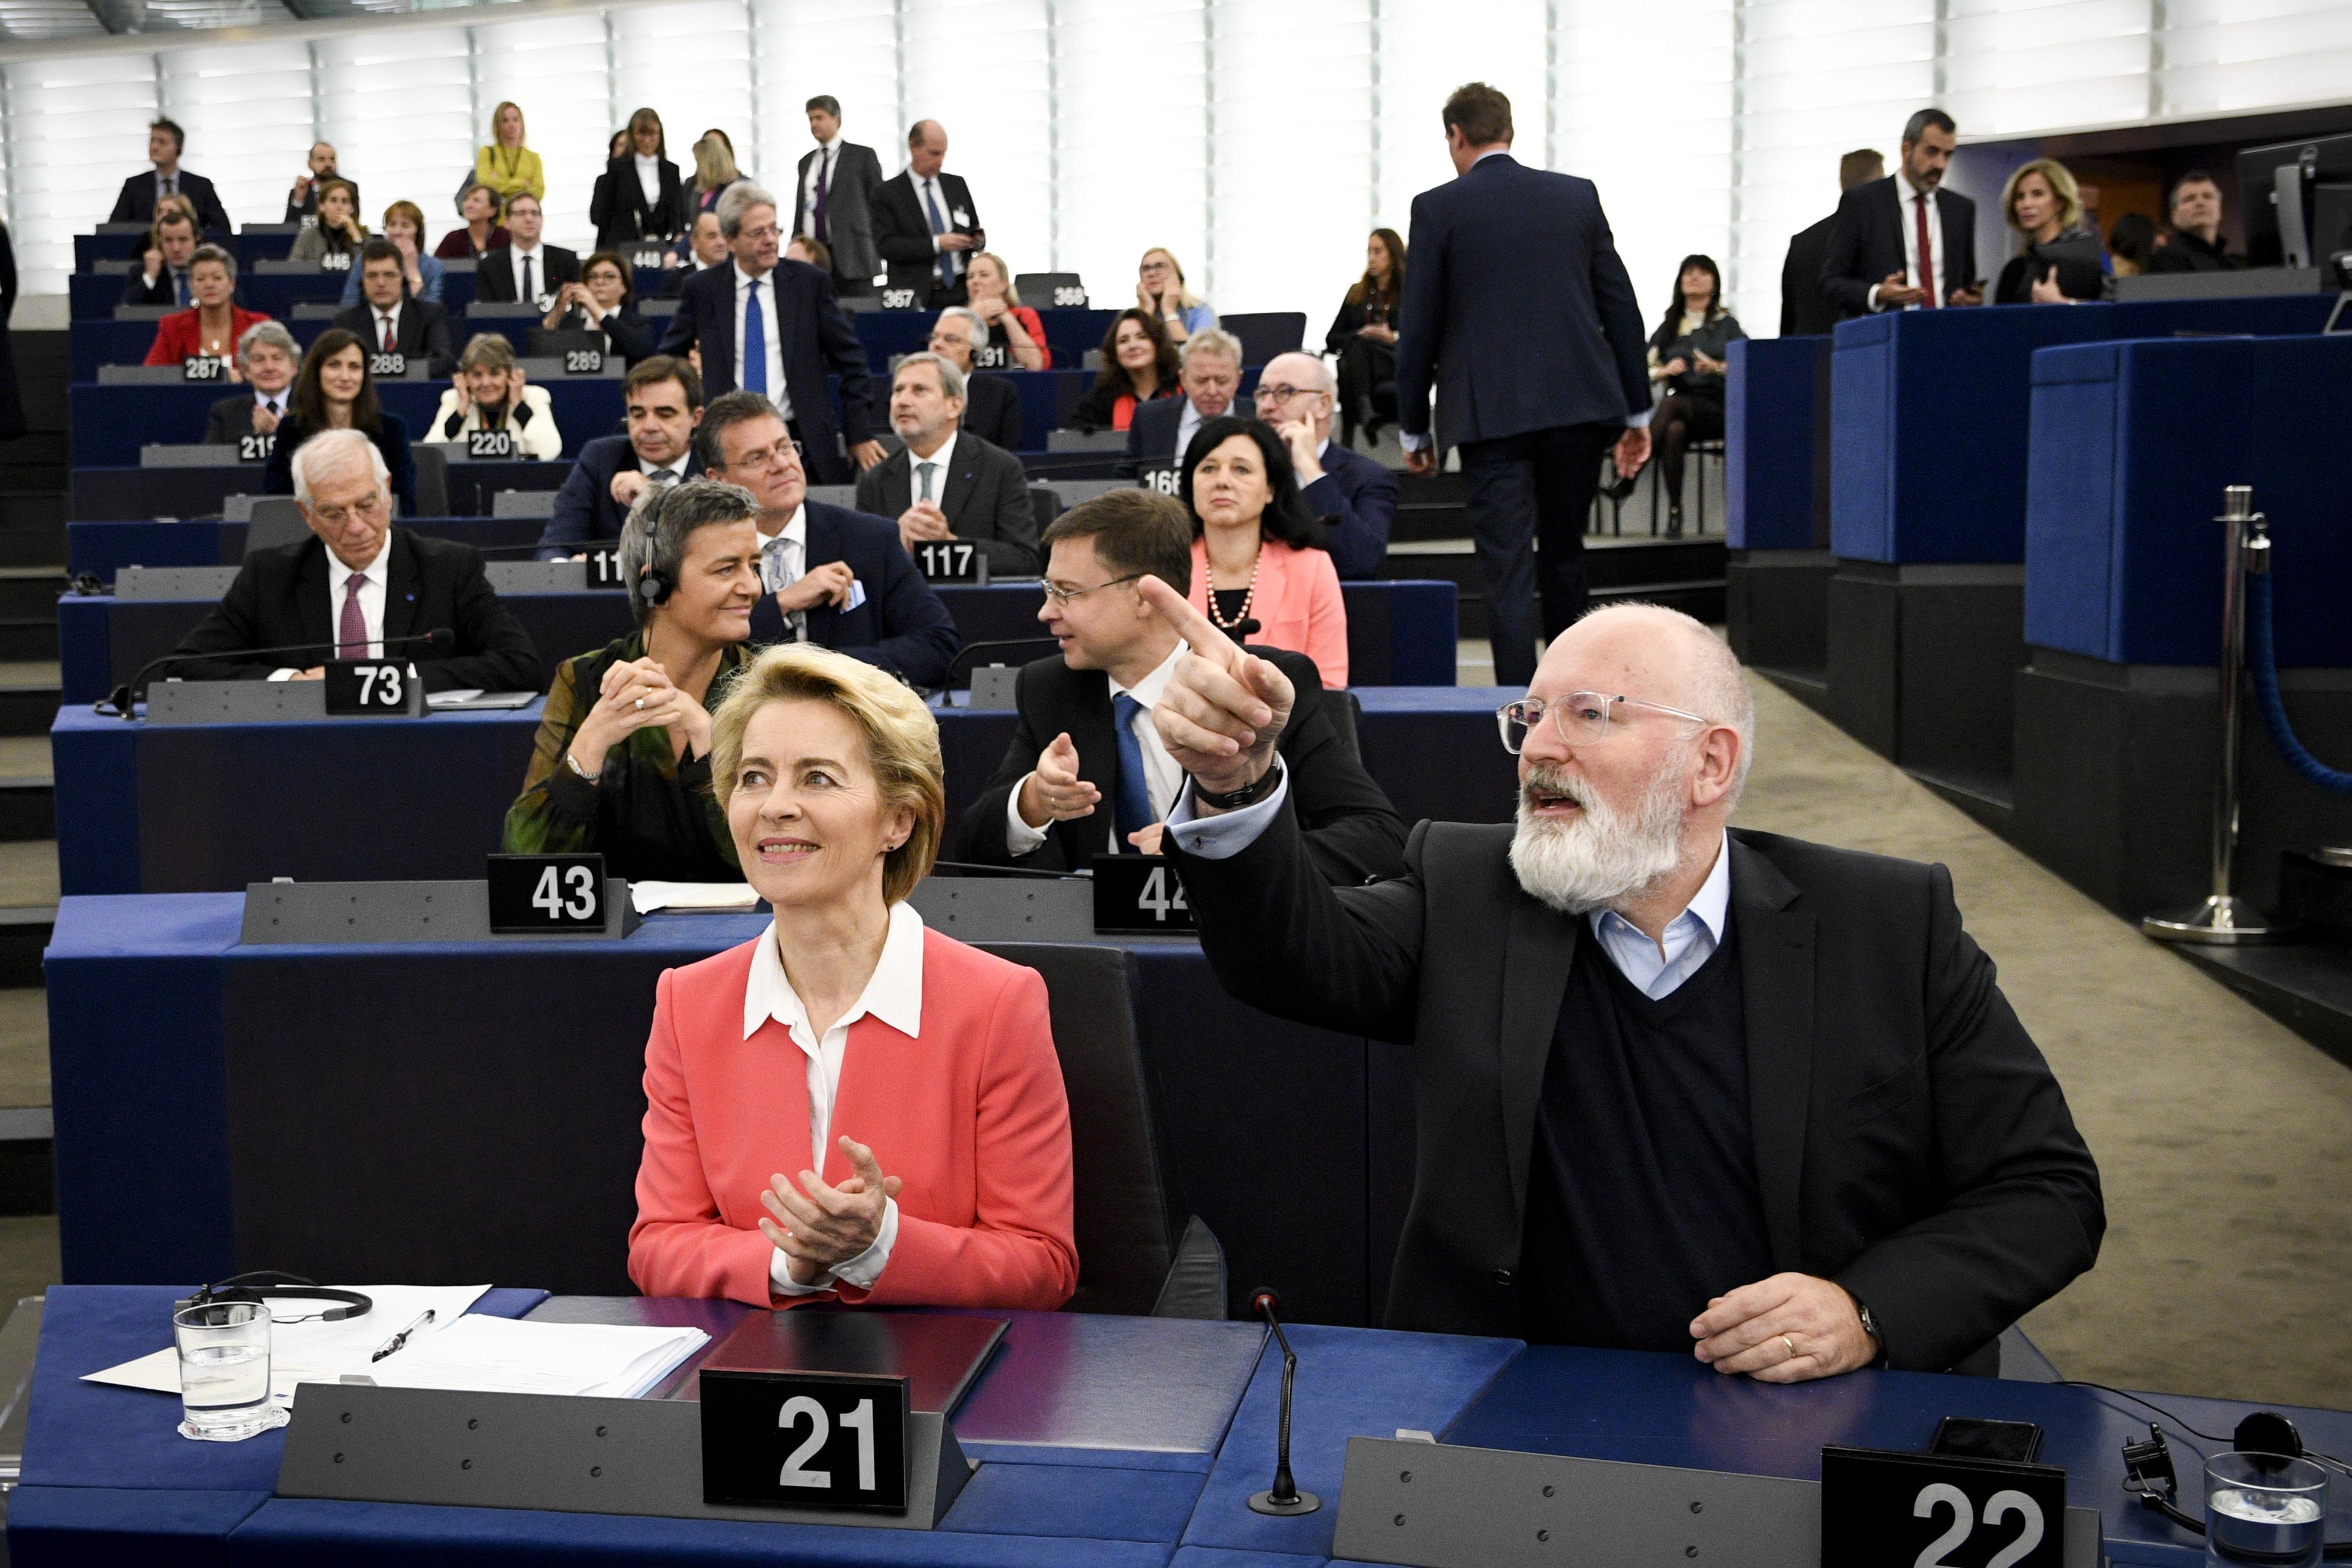 Ursula von der Leyenin komissio Euroopan parlamentissa Strasbourgissa 27.11.2019. Kuva: Euroopan parlamentti